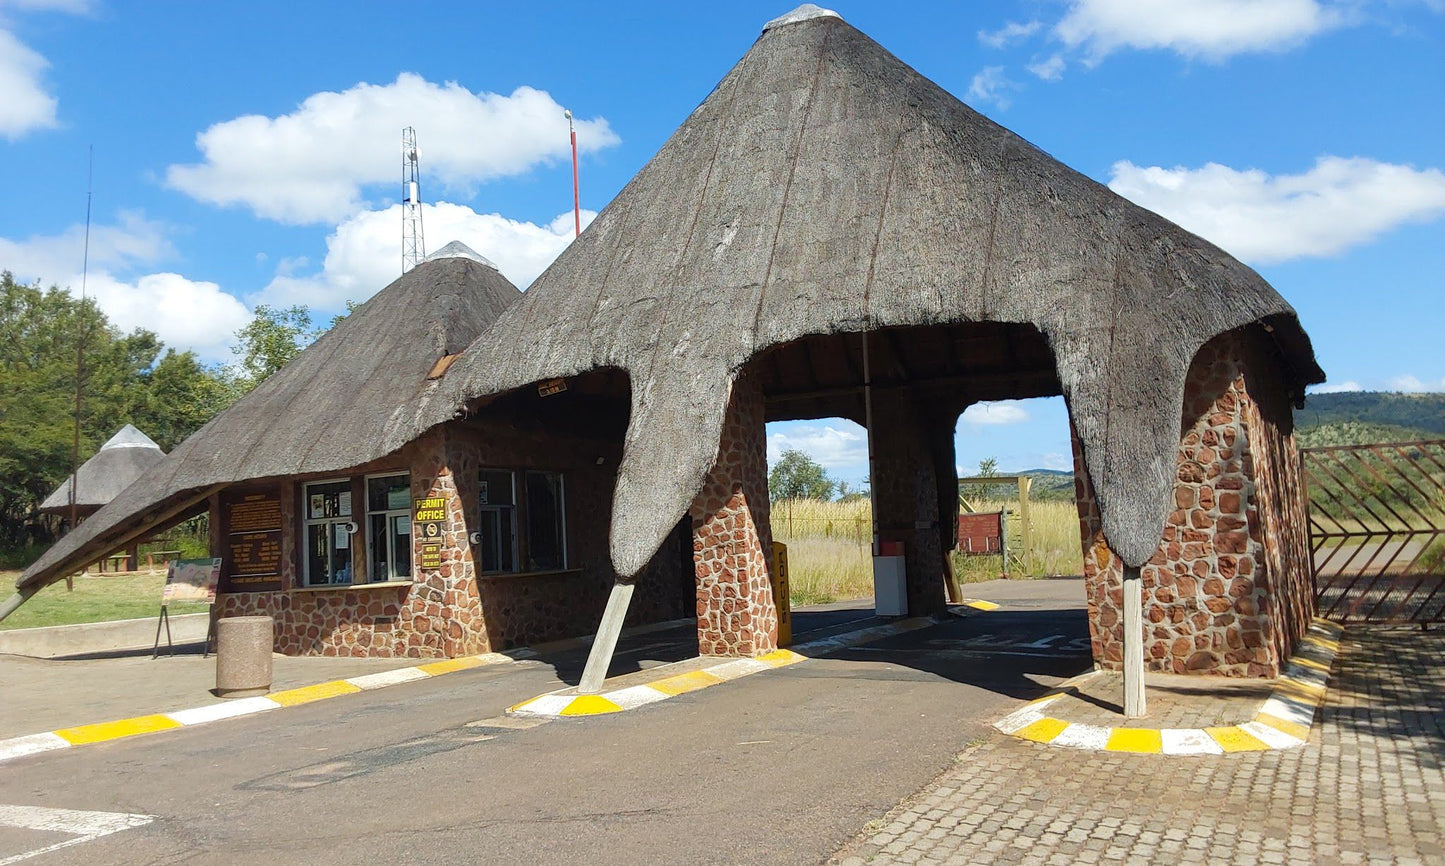  Pilanesberg National Park